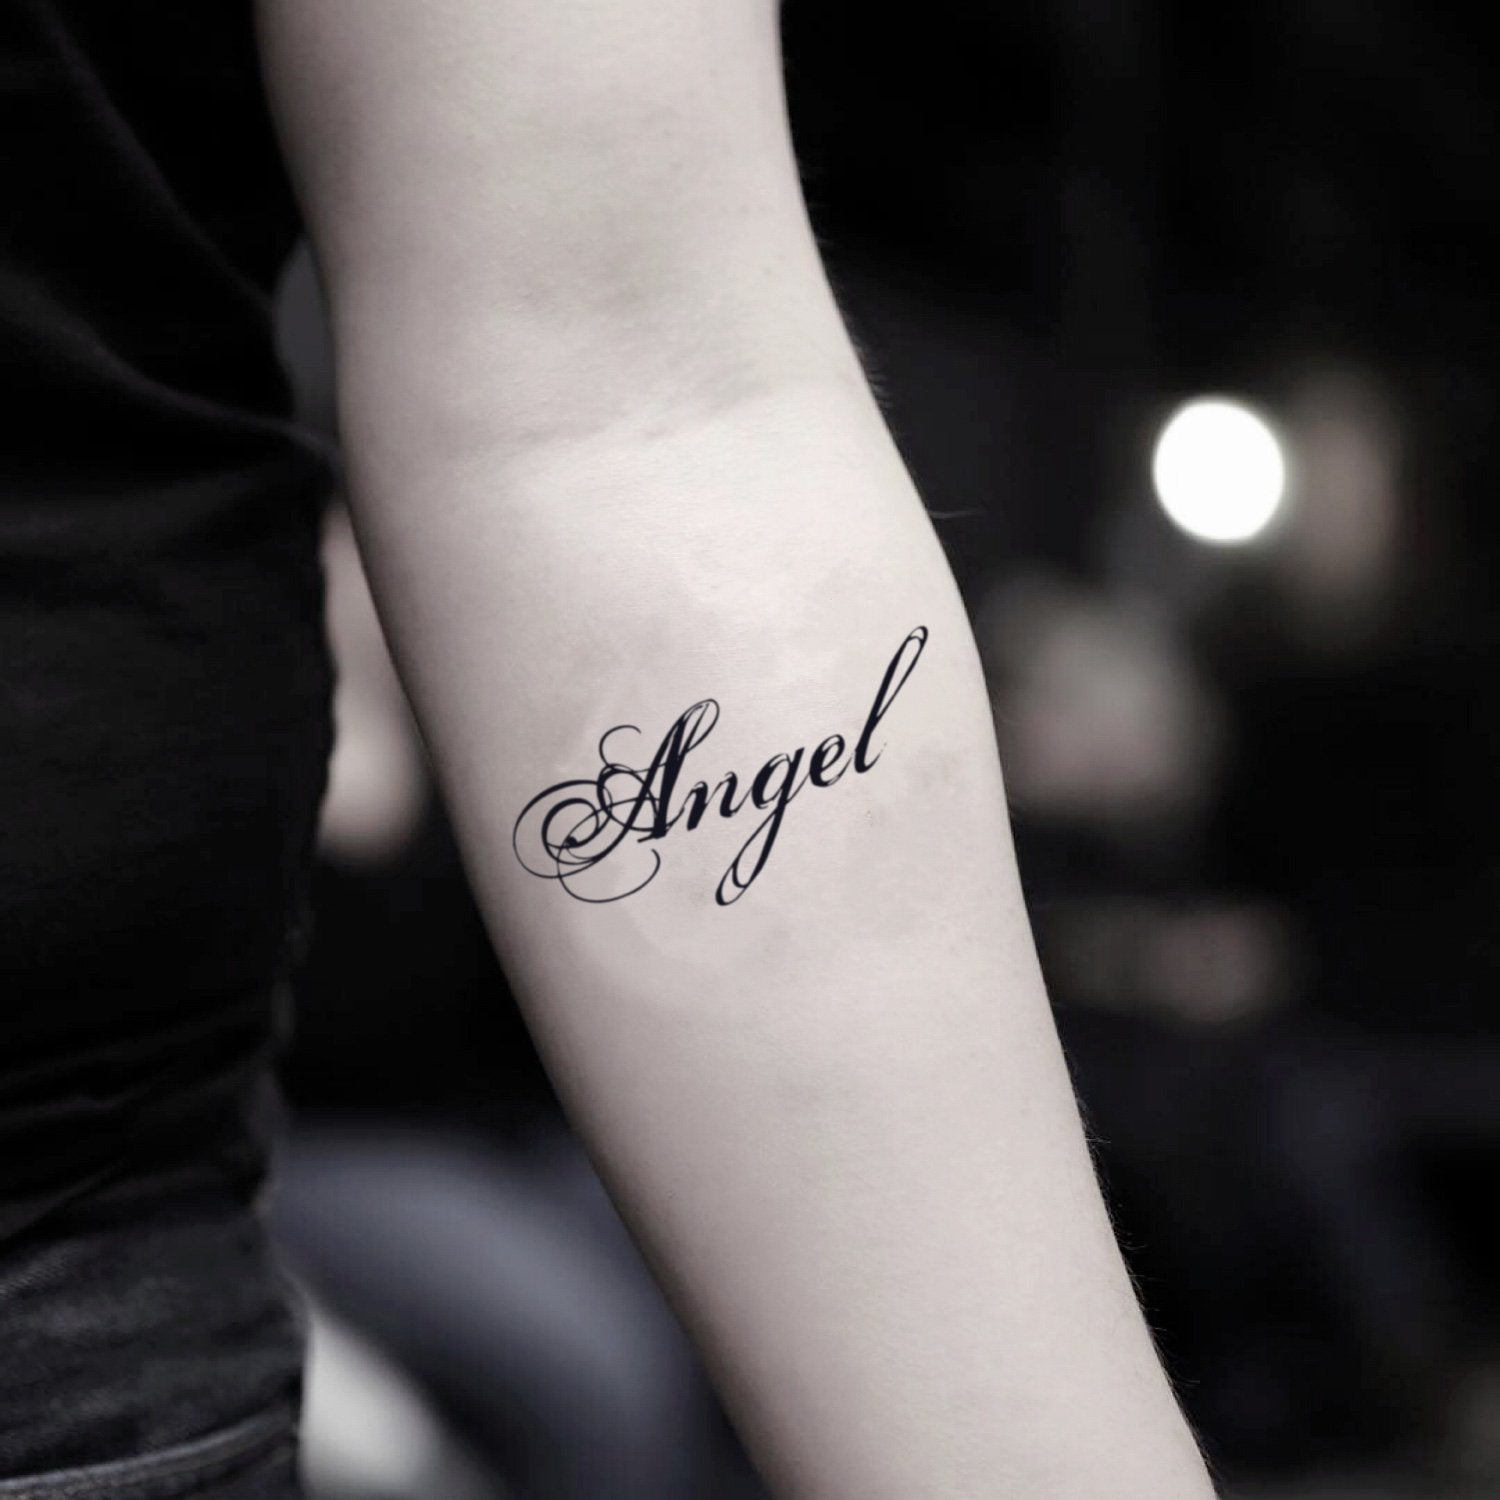 name angel tattoo designs